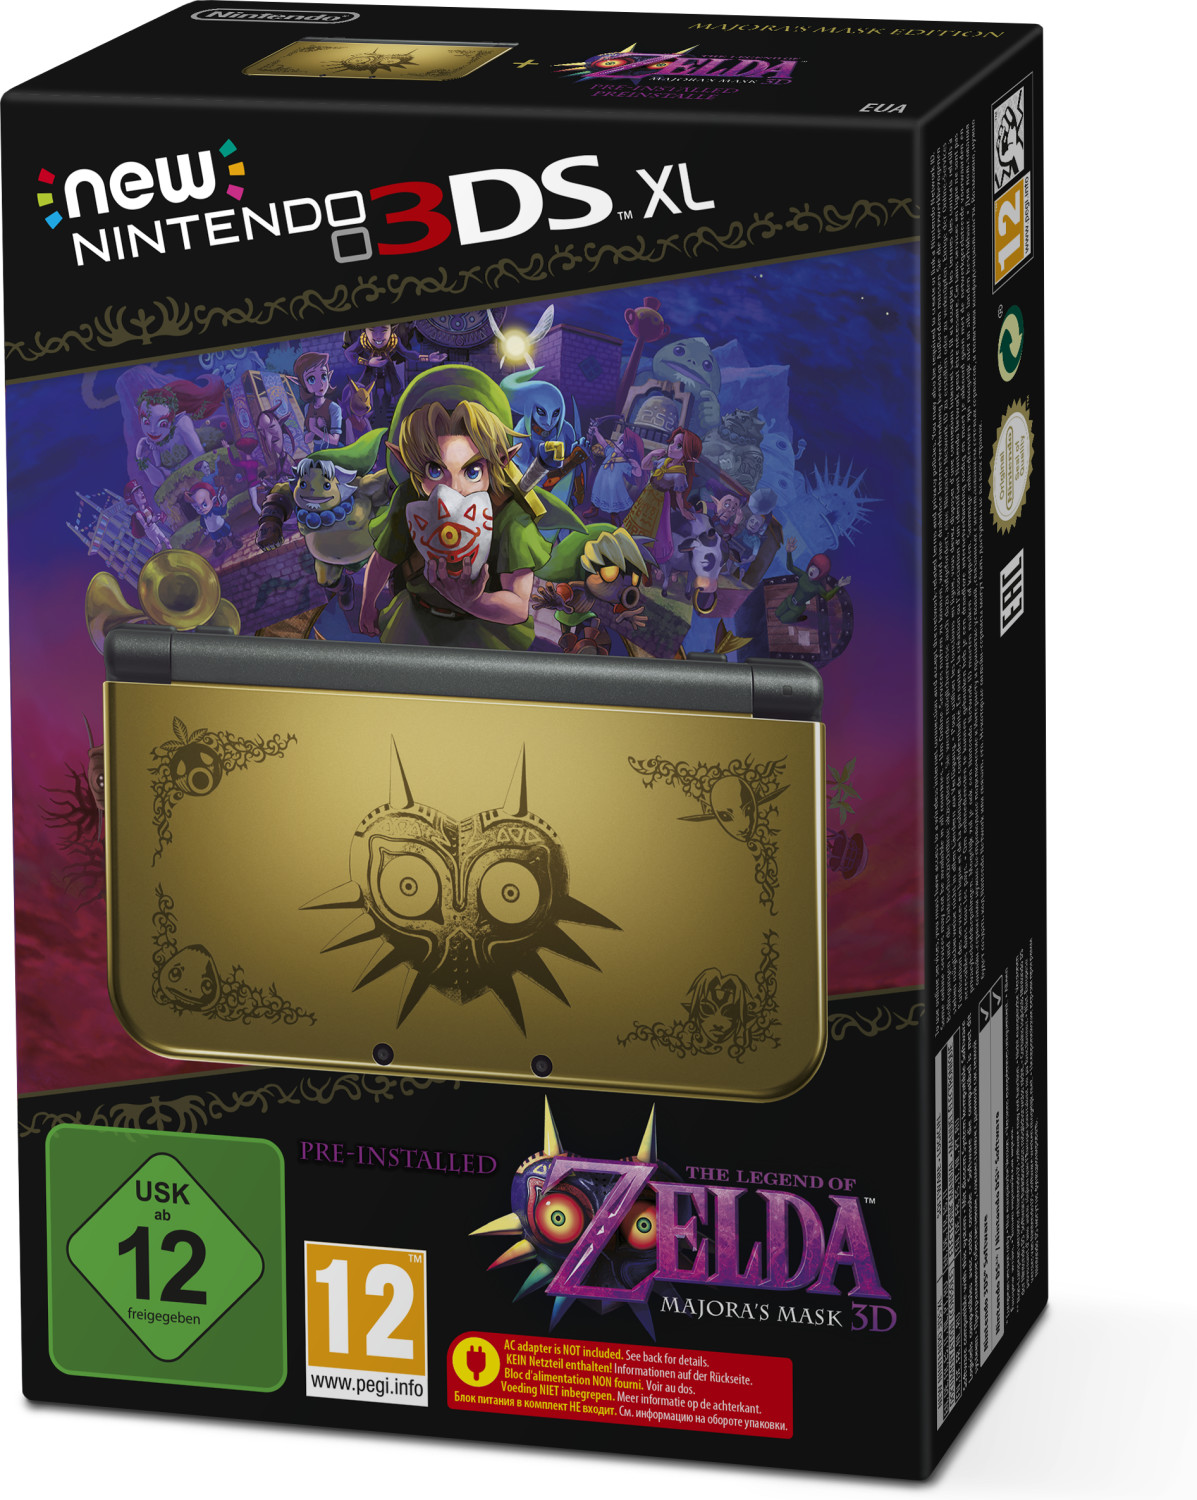 Nintendo New 3DS XL The Legend of Zelda: Majora's Mask 3D Edition